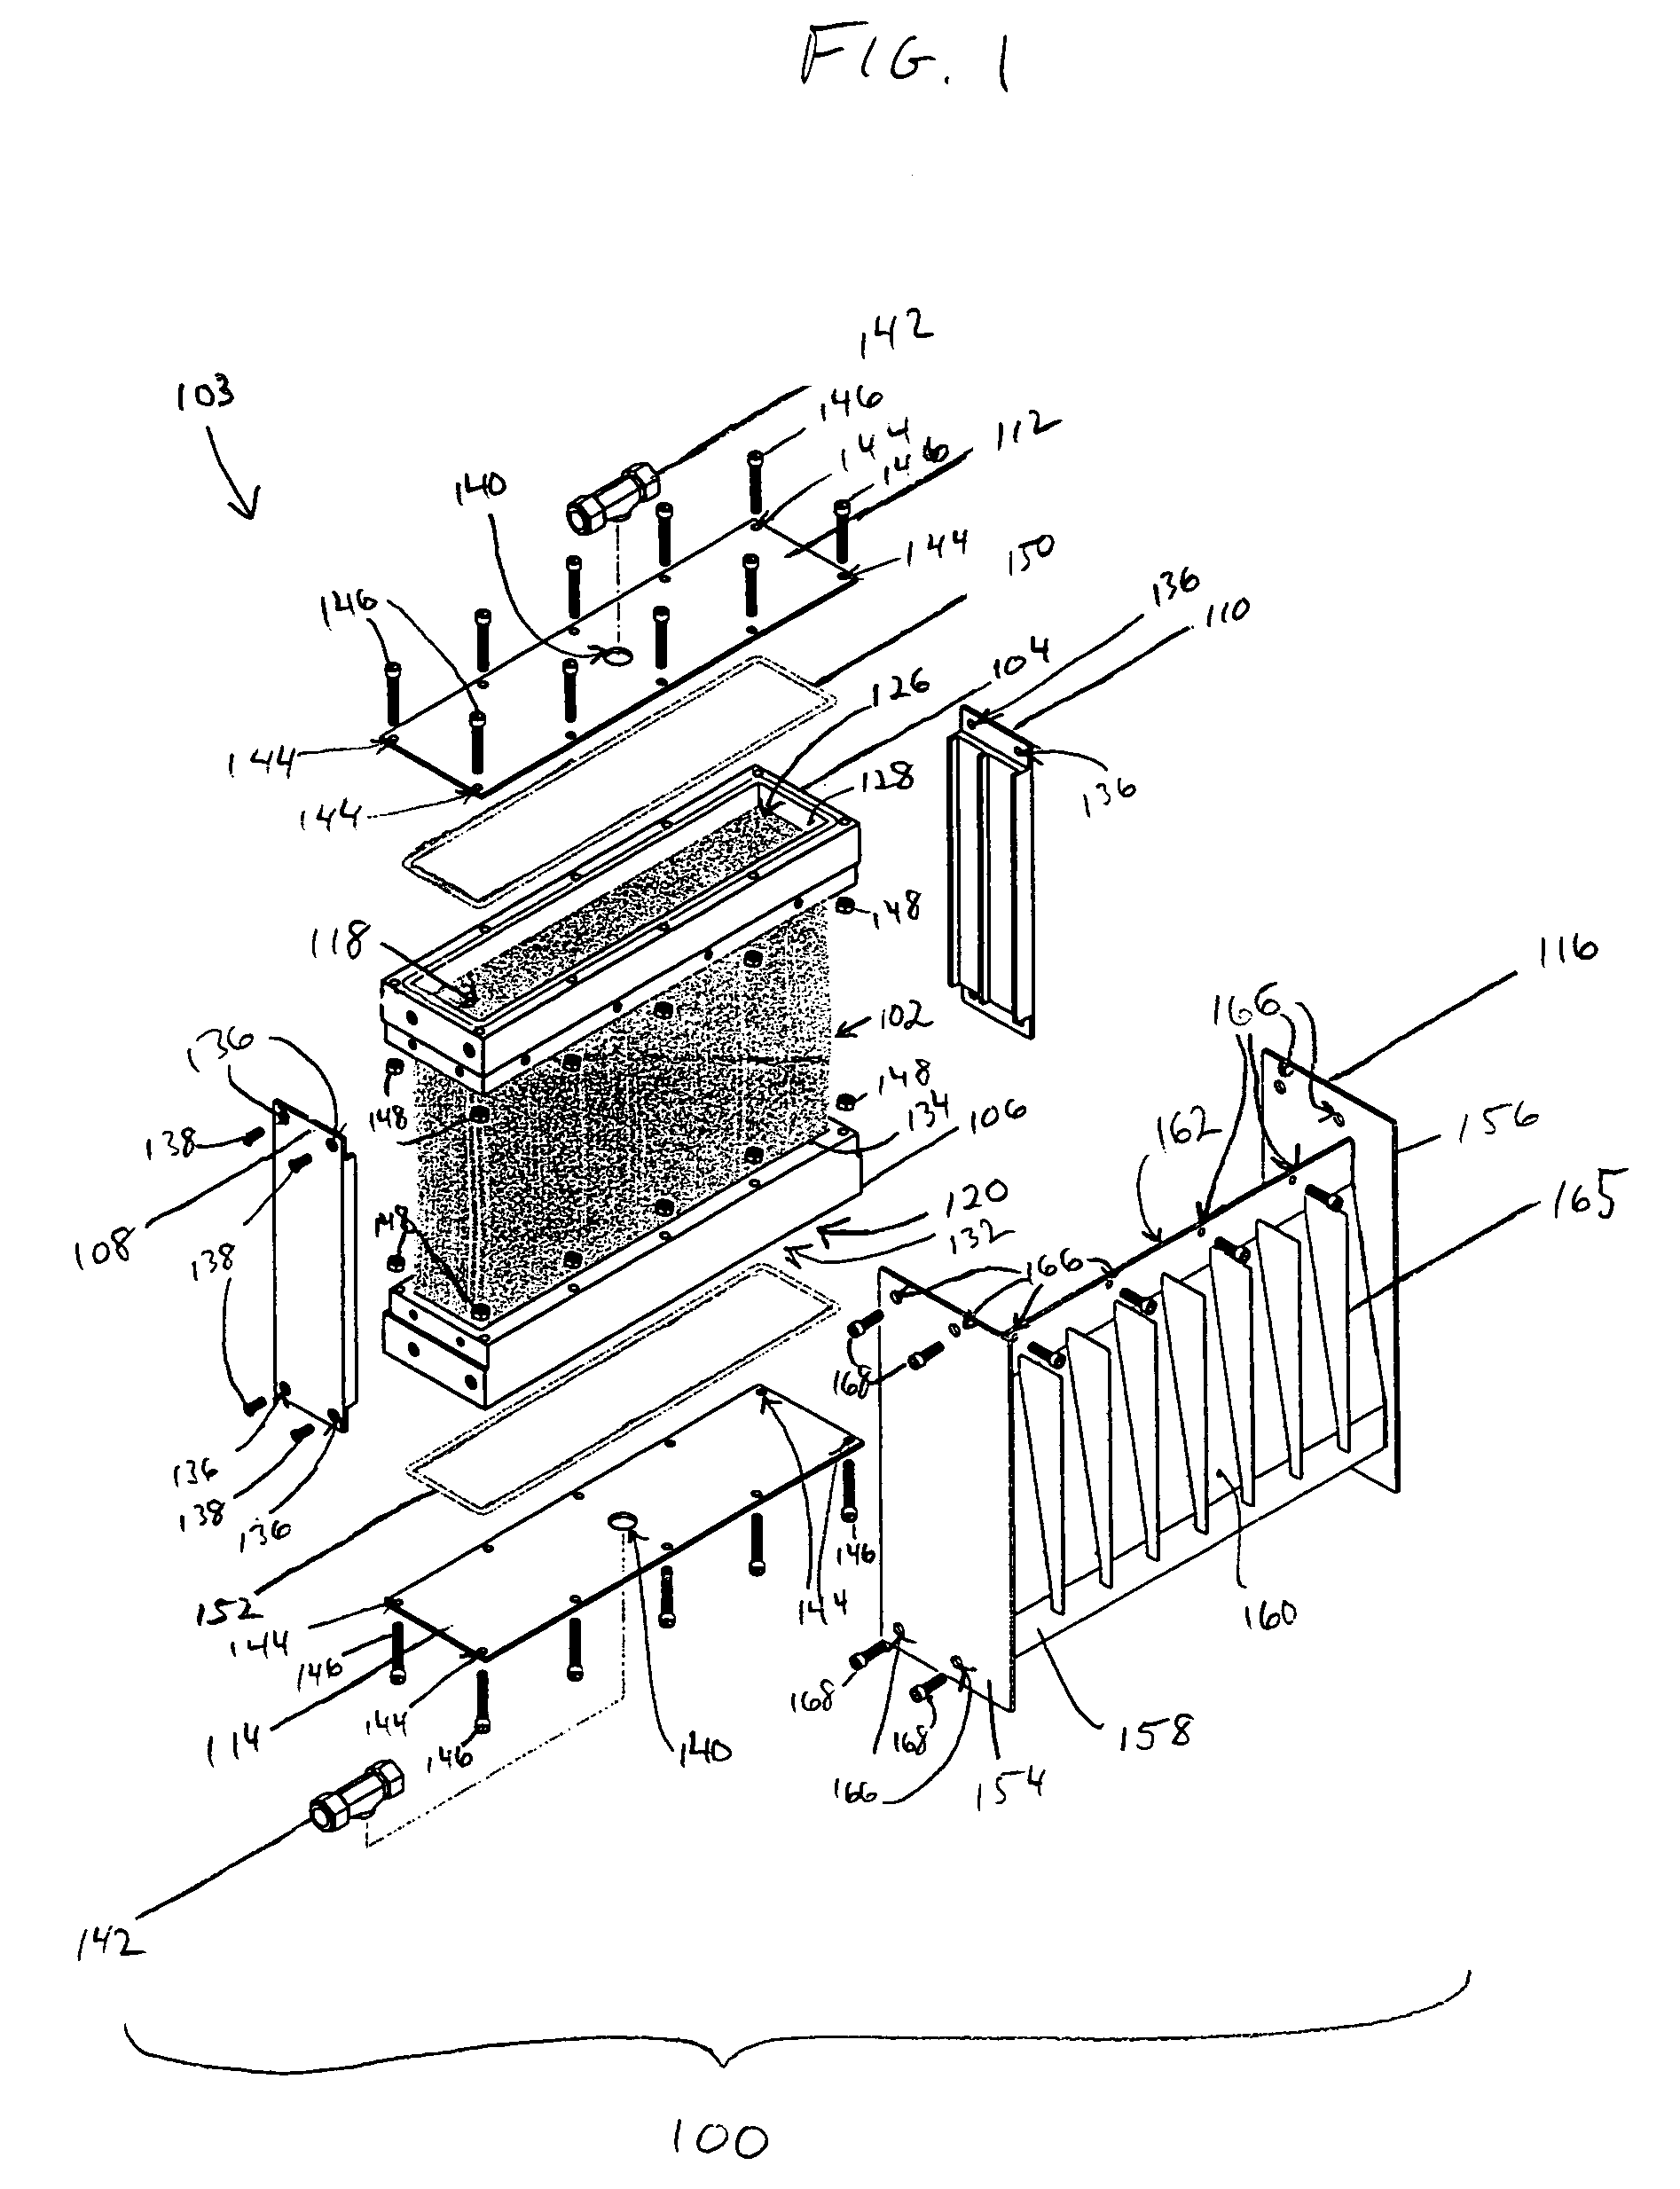 Membrane contactor apparatus including a module having hollow fiber membranes